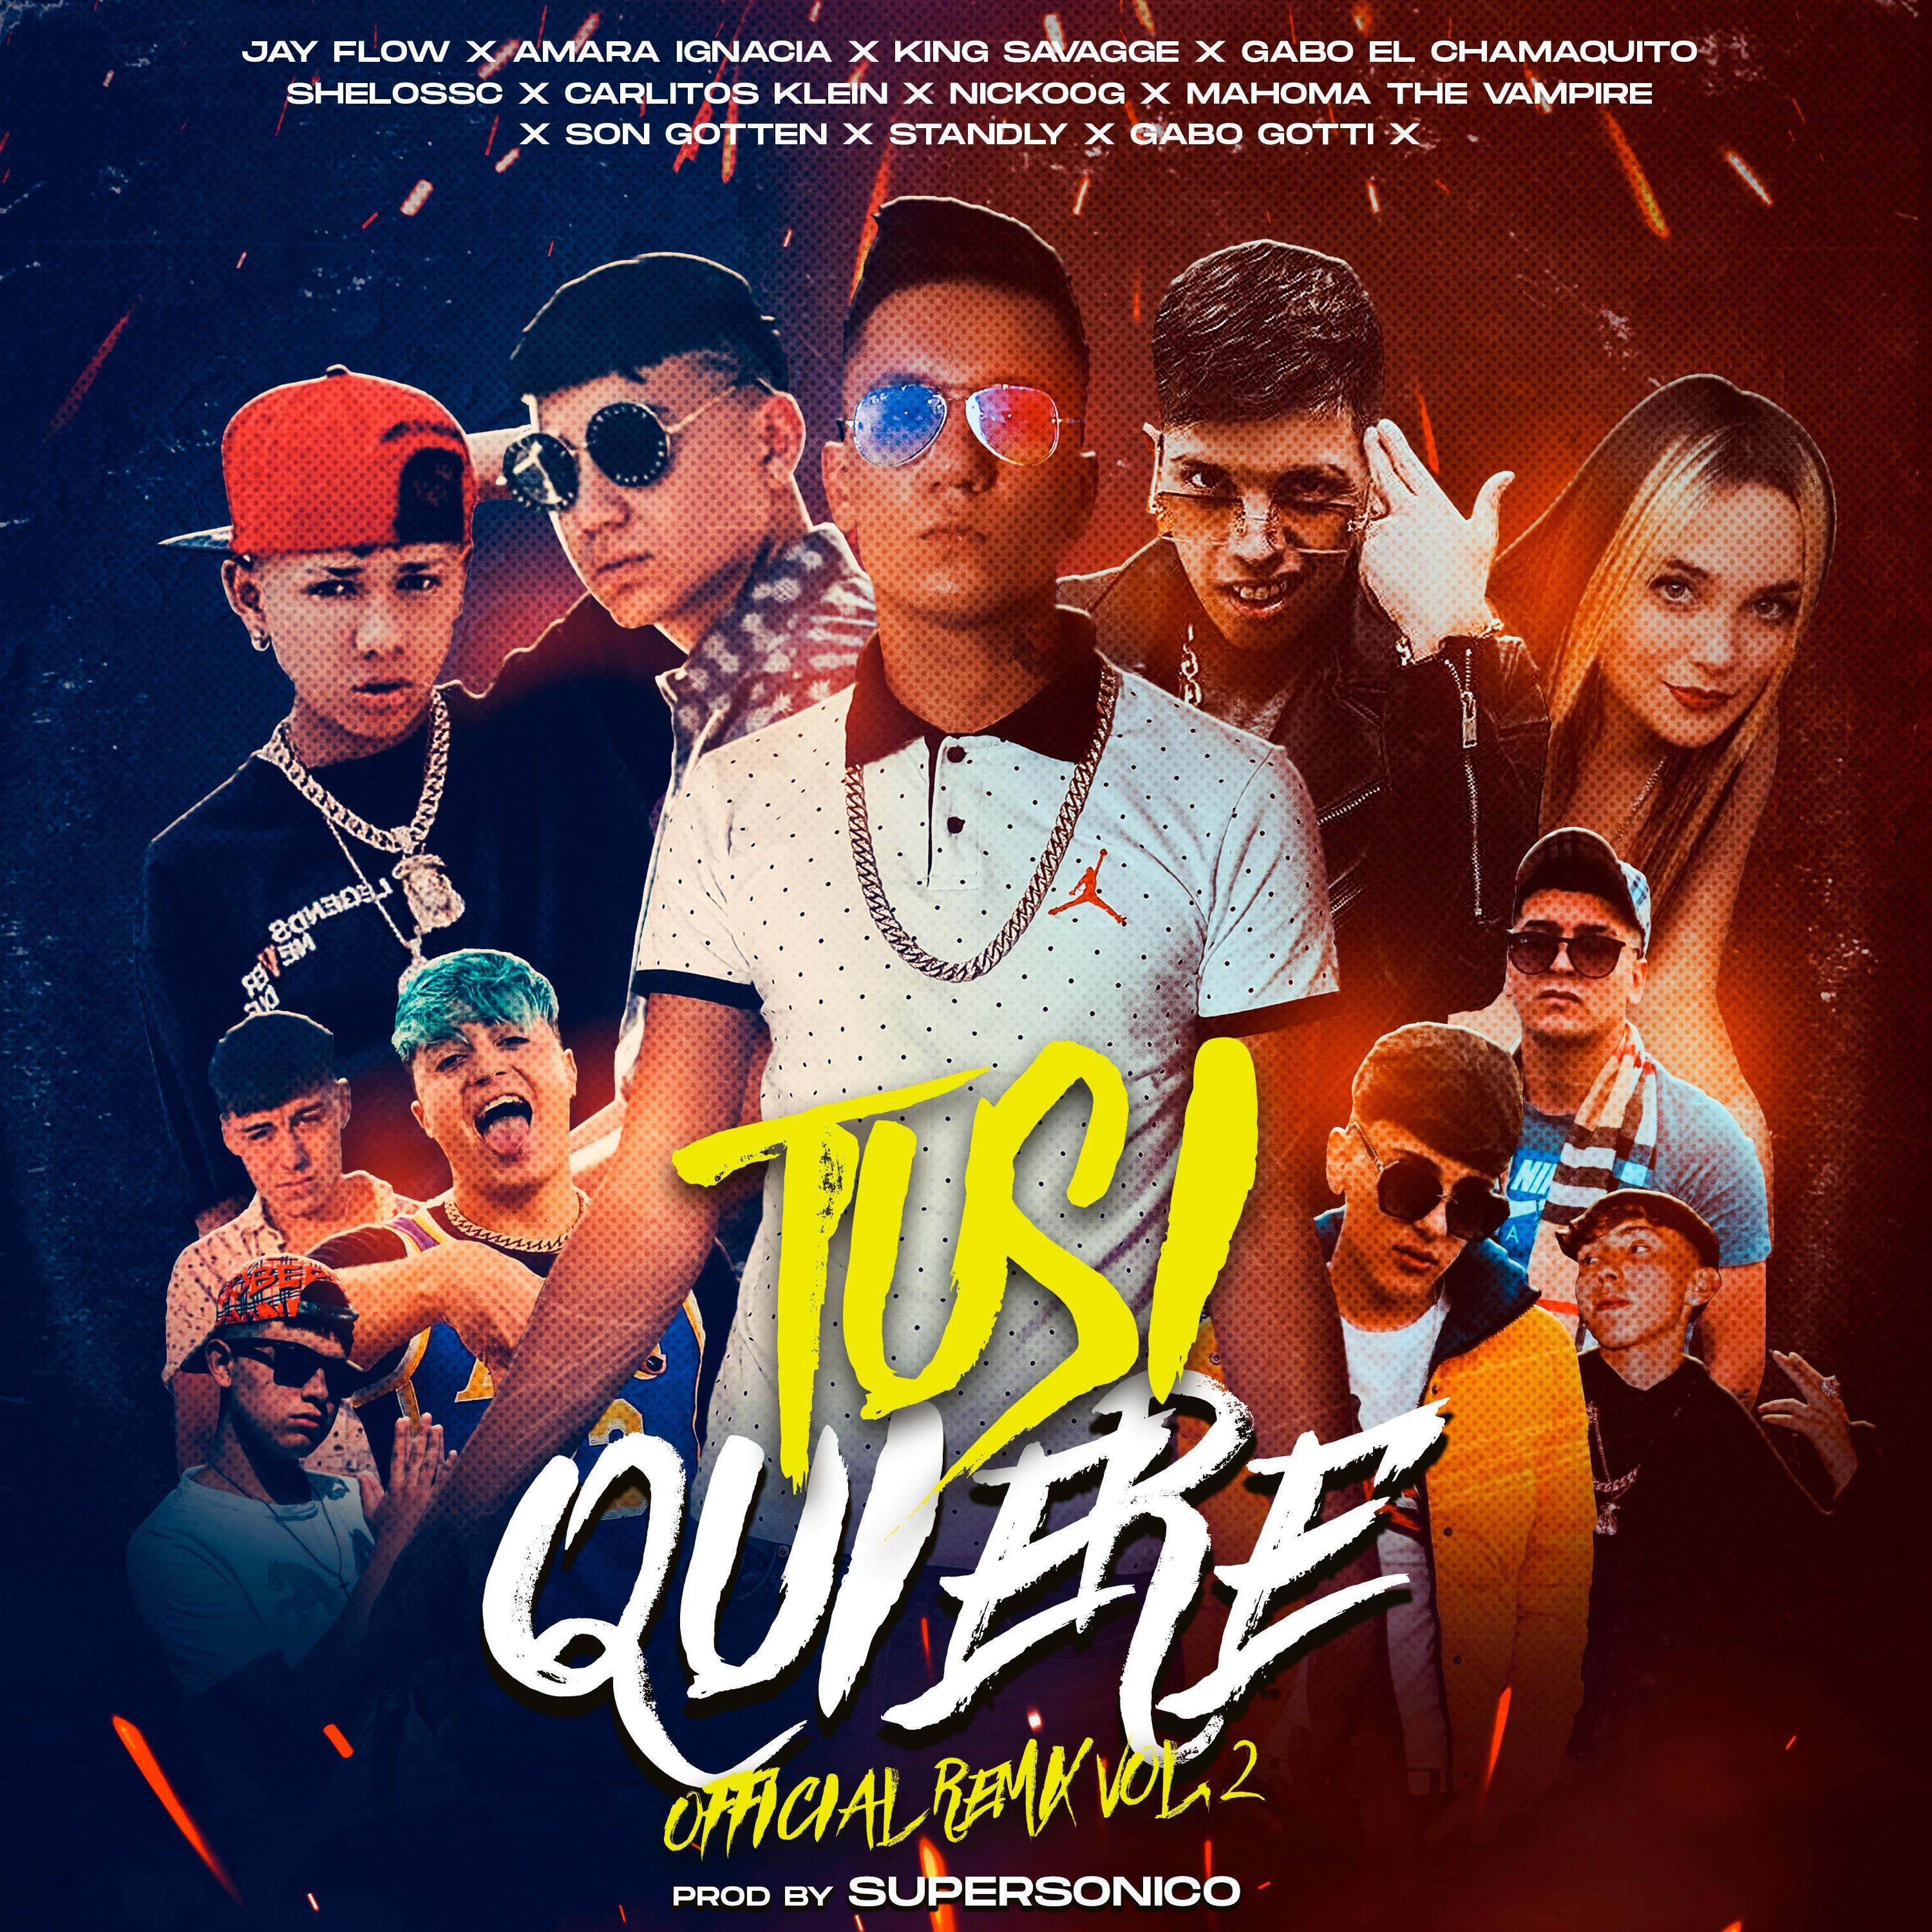 Jay Flow Music - Tusi Quiere Vol 2 (feat. Amara Ignacia, King Savagge, Shelo, Nickoog clk, Standly, Carlitos Klein & Gabo El Chamaquito)